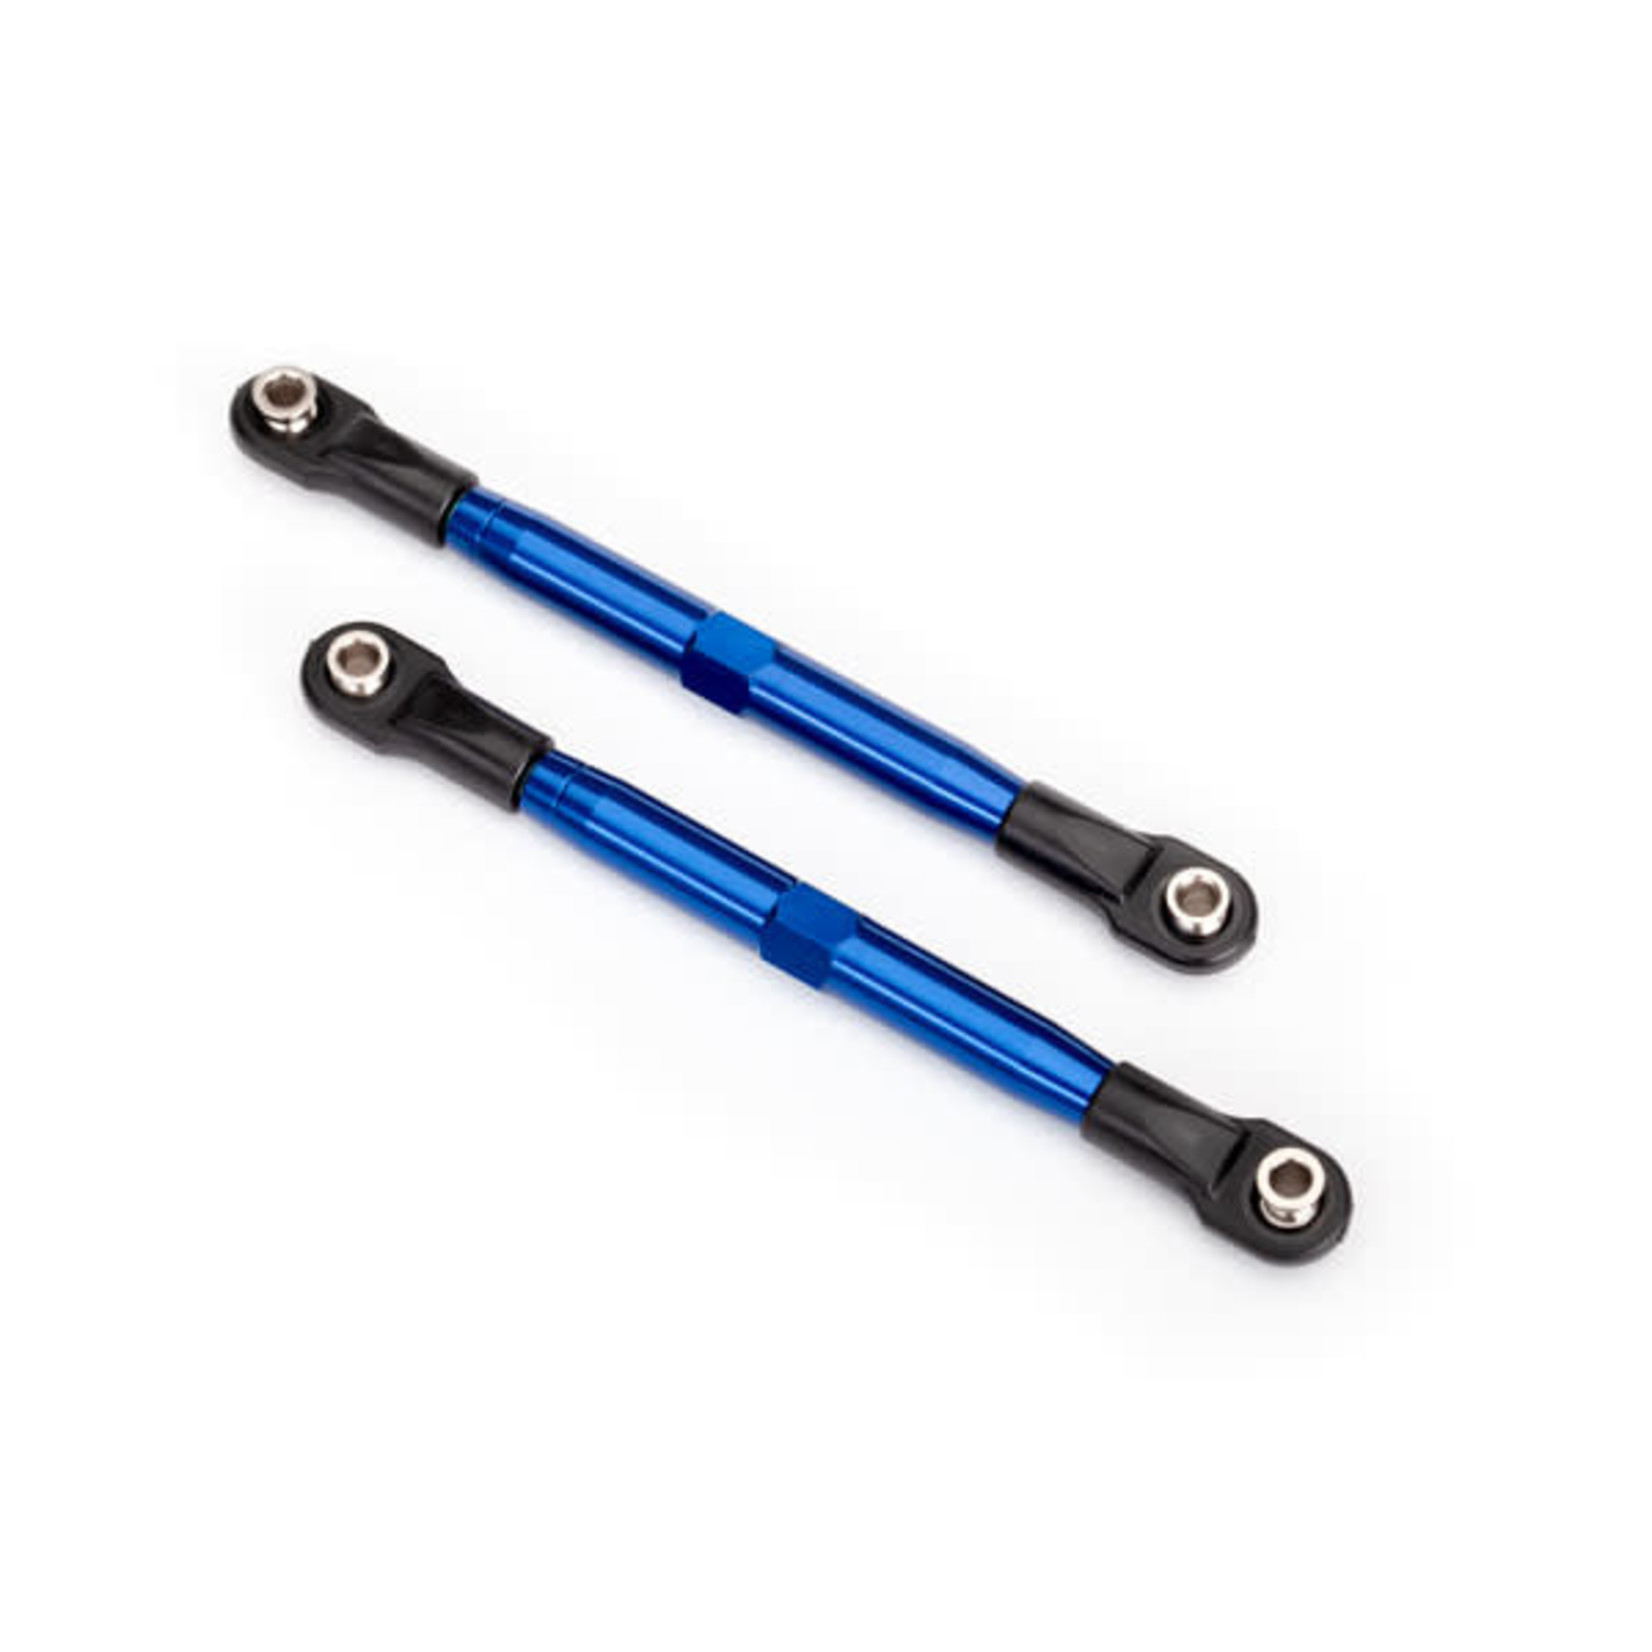 TRAXXAS Toe links (TUBES blue-anodized, 7075-T6 aluminum, stronger than titanium) (87mm) (2)/ rod ends (4)/ aluminum wrench (1)